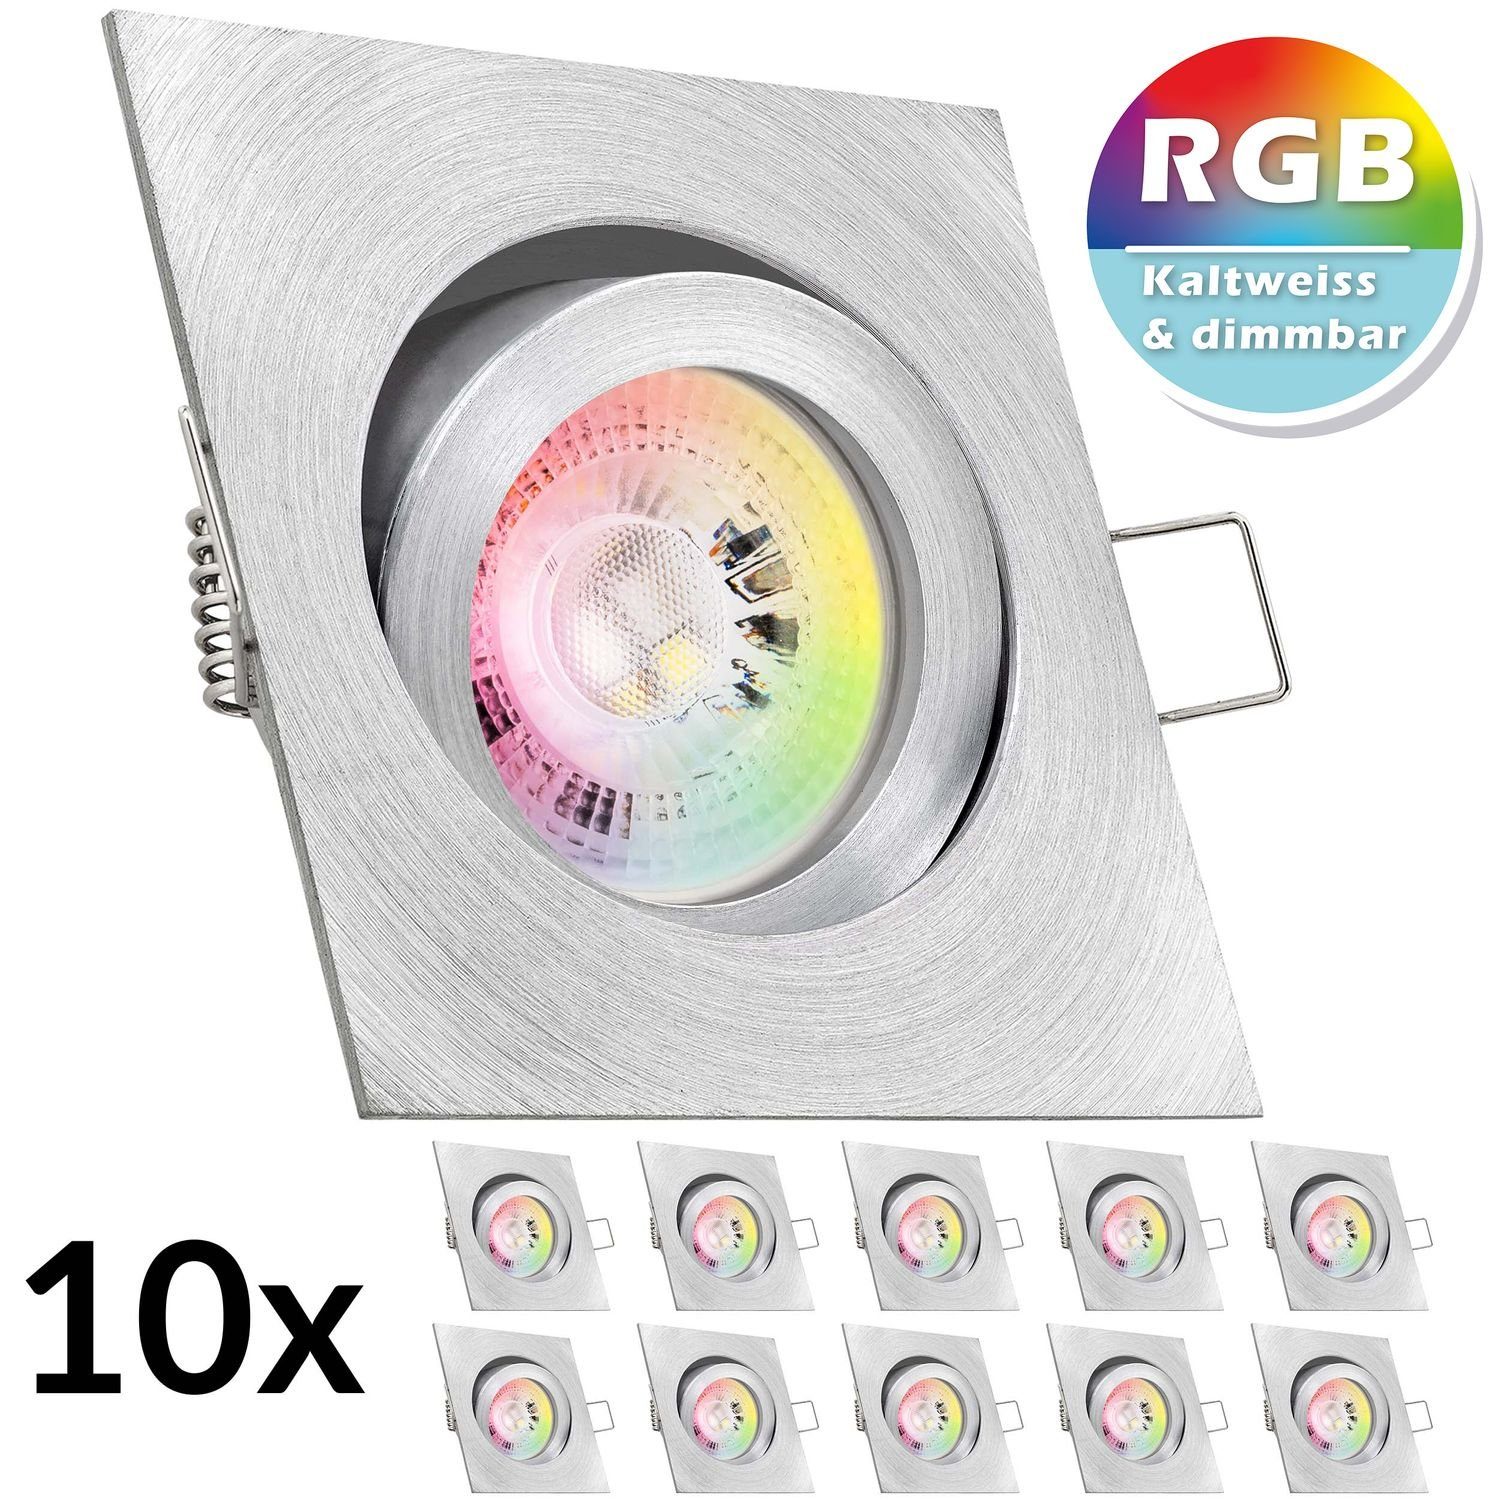 von aluminium GU10 LED mit Einbaustrahler in 10er LED RGB LED Set 3W matt LEDANDO Einbaustrahler